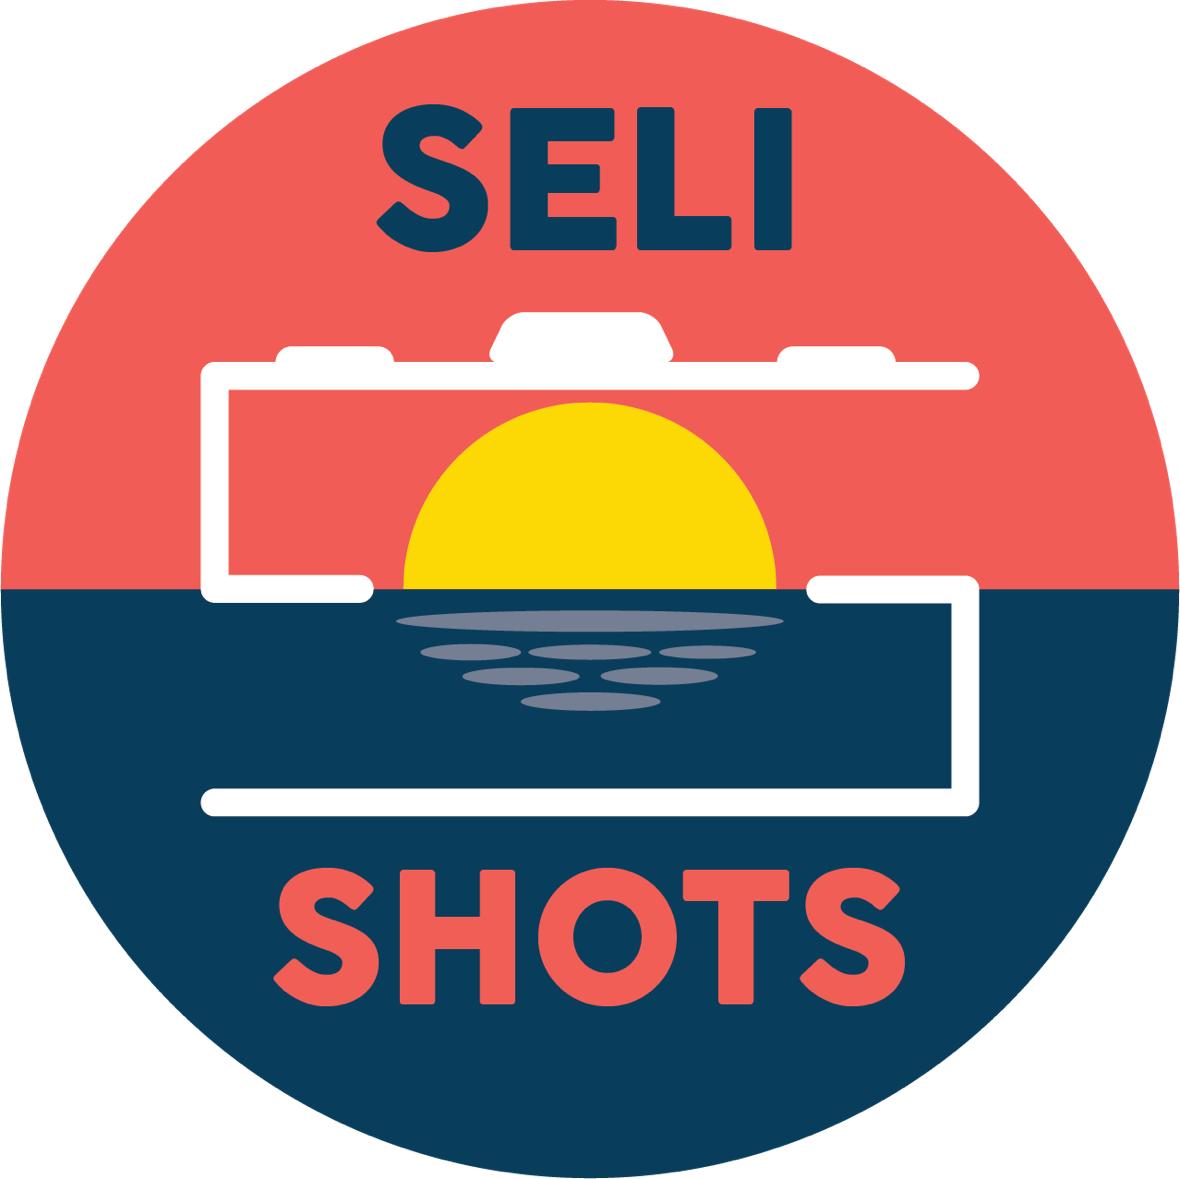 Selishots's images